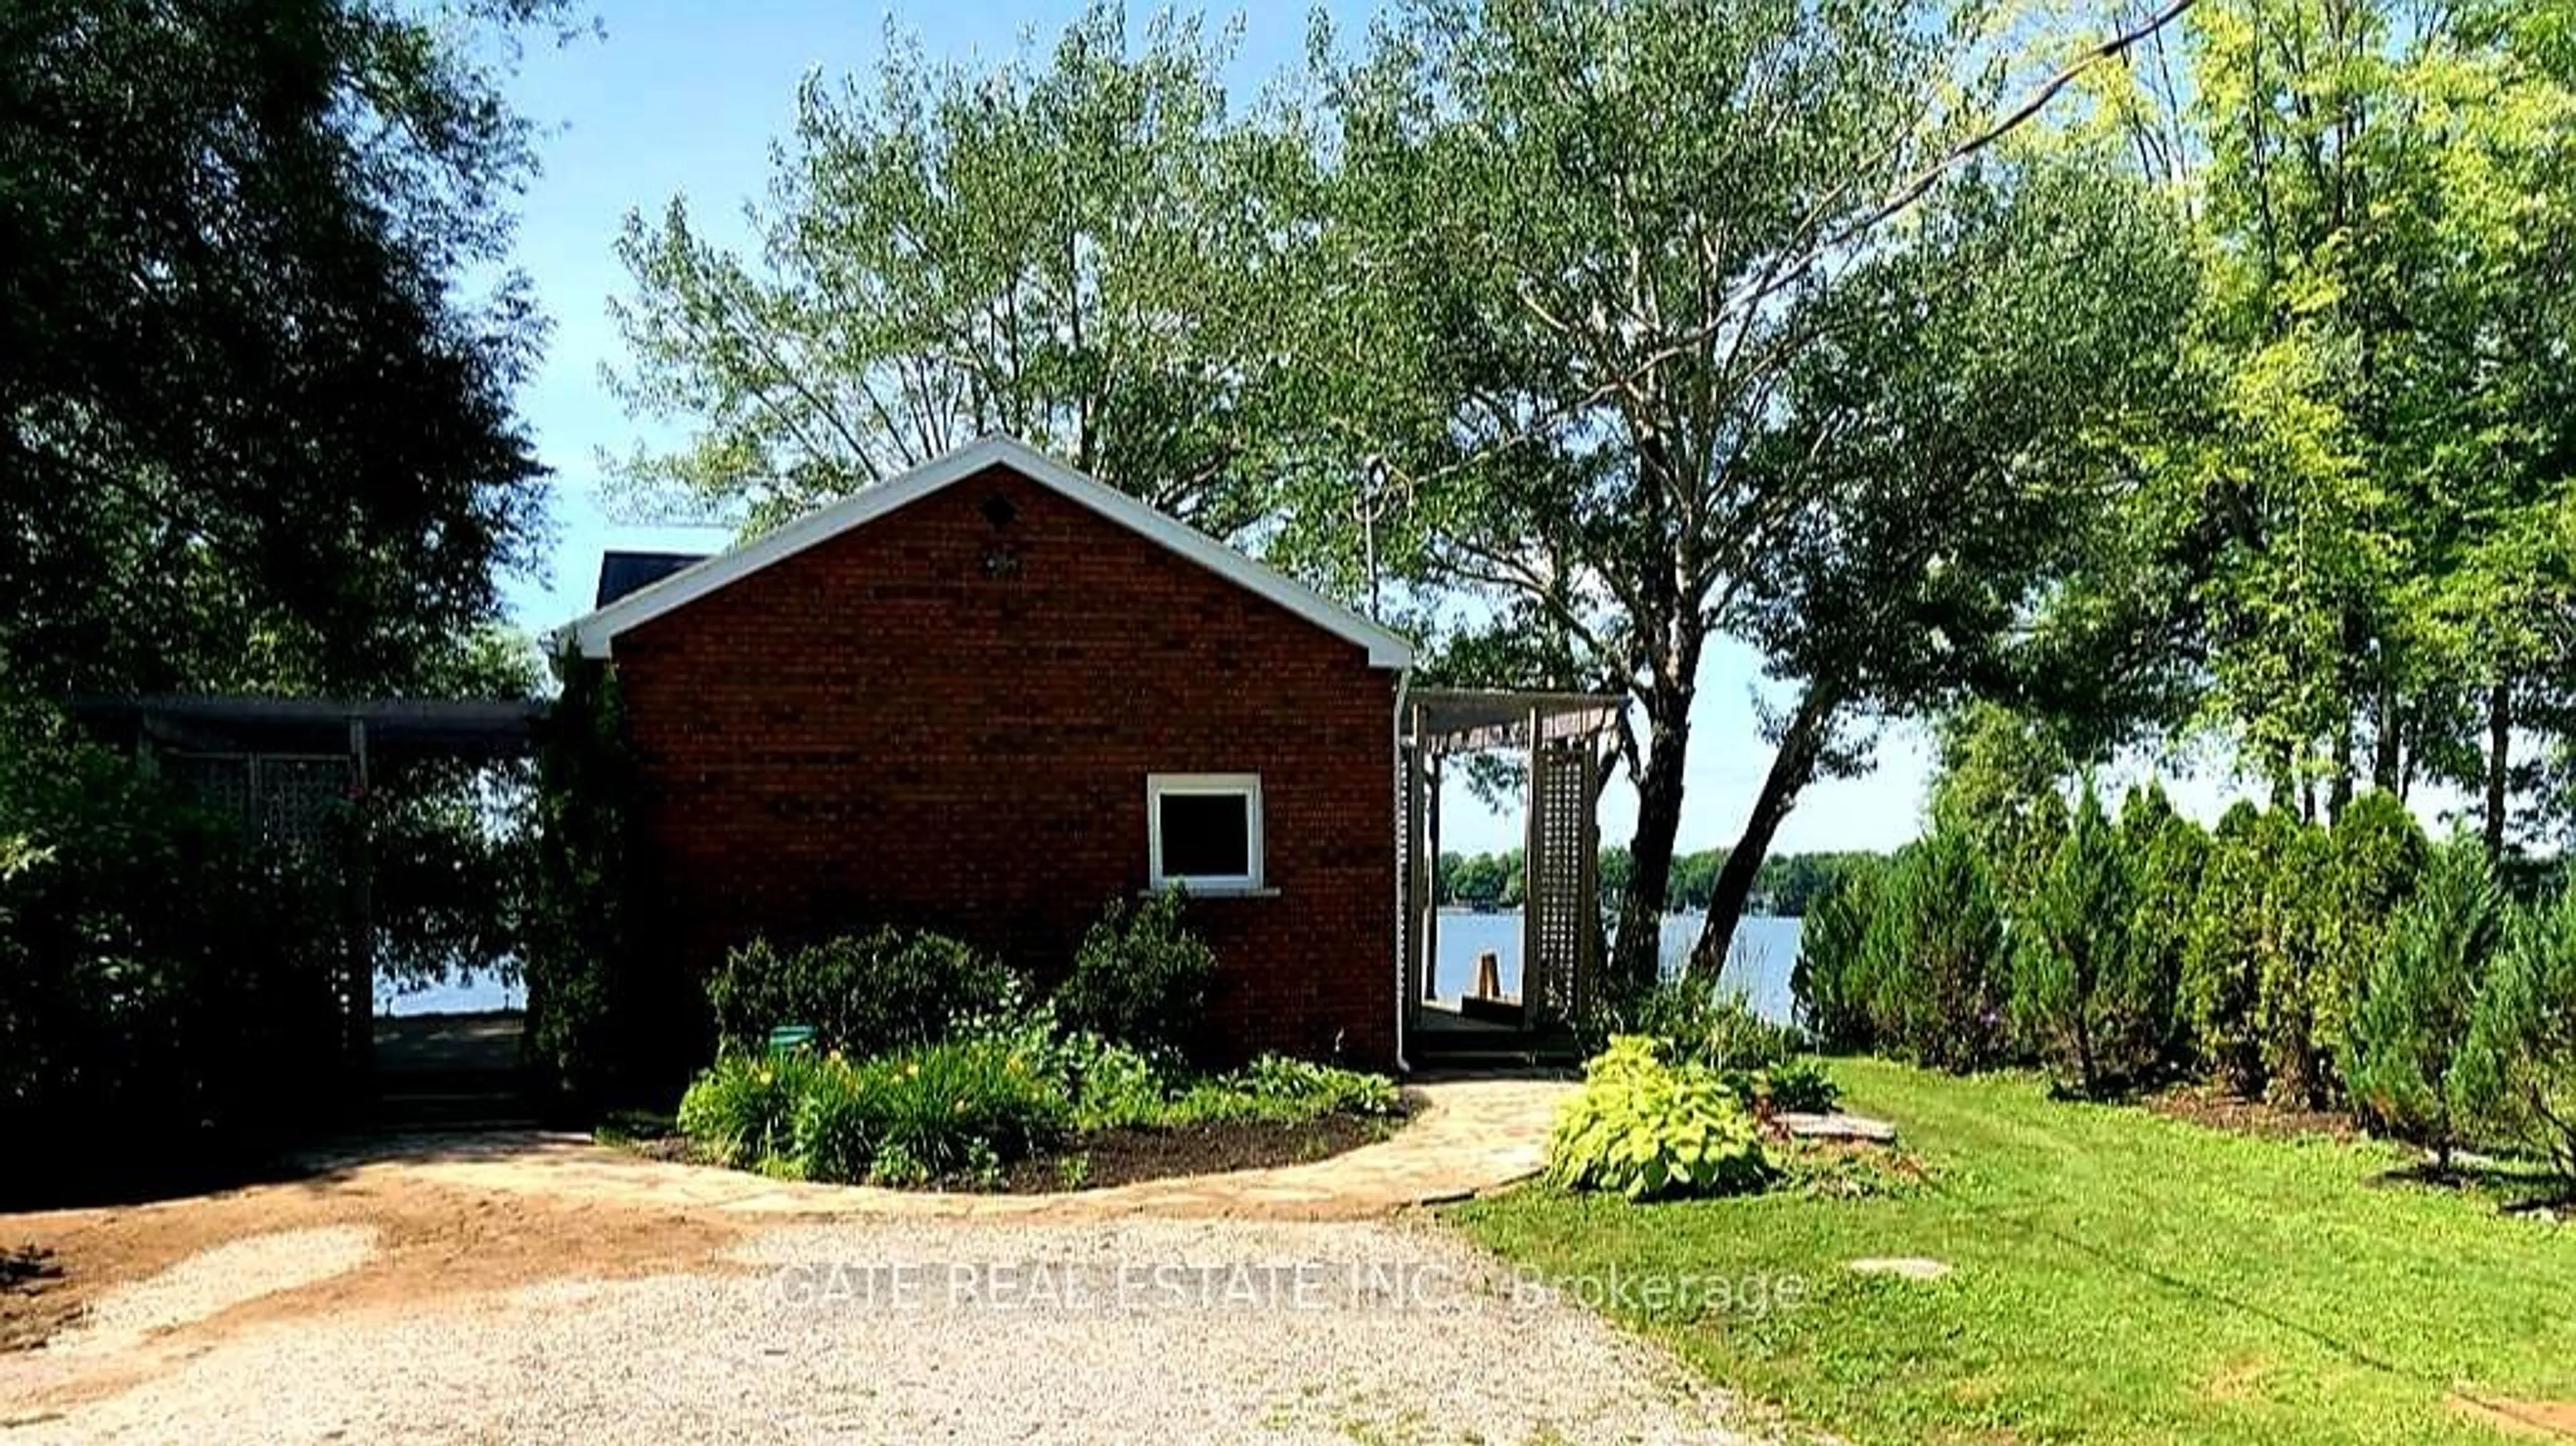 Cottage for 163 Victoria Cres, Orillia Ontario L3V 0J5